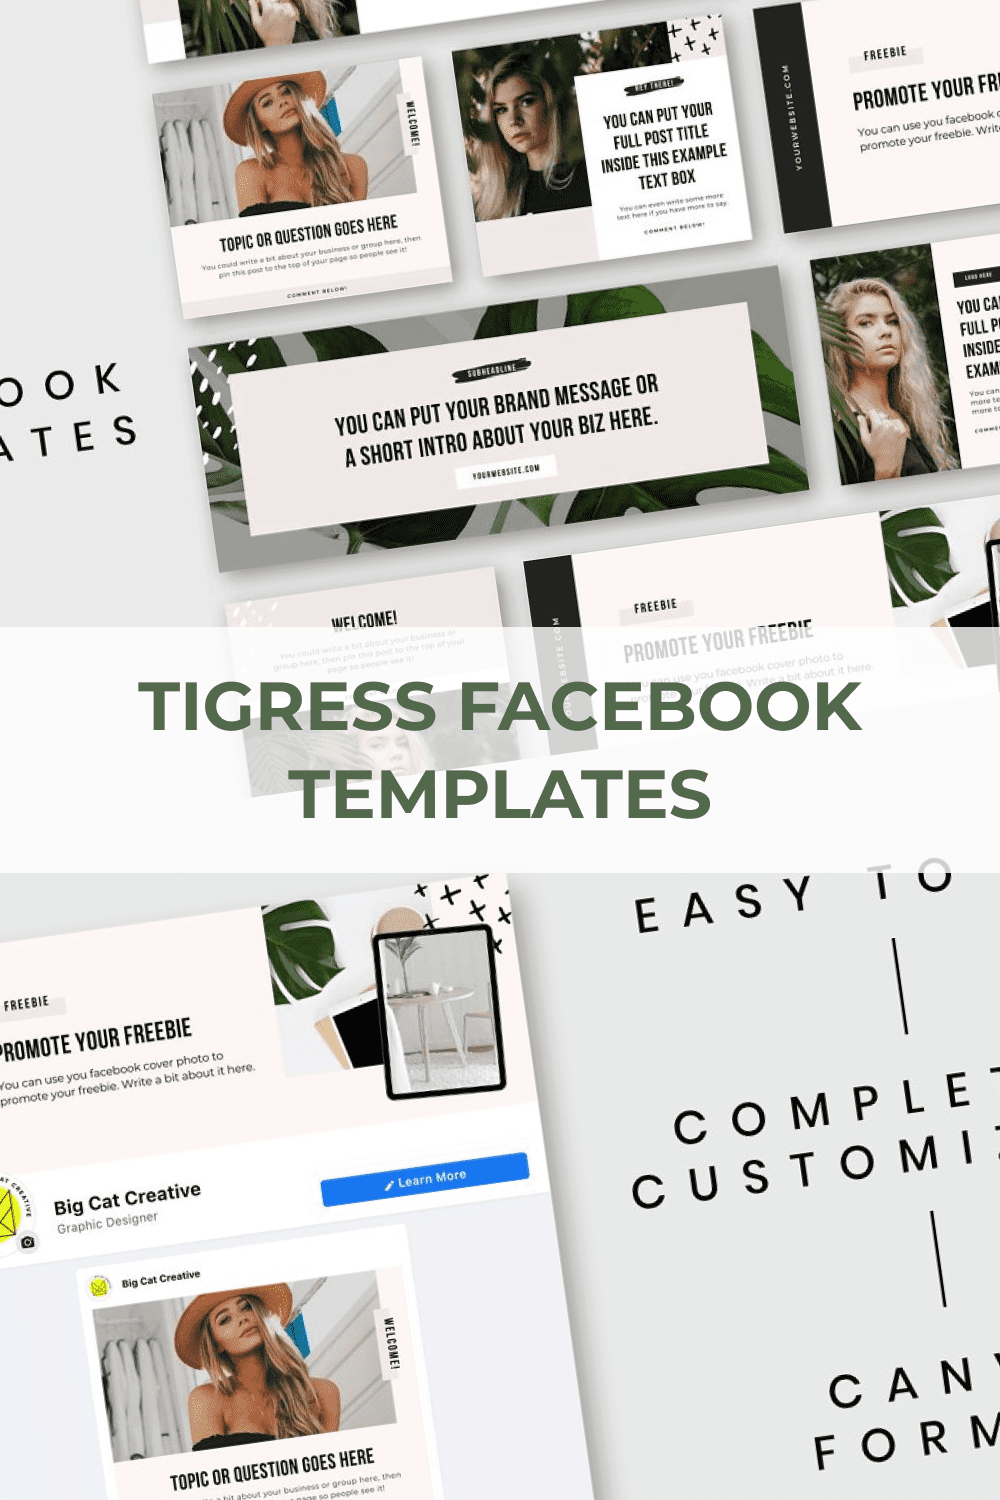 Tigress Facebook Templates Pinterest.